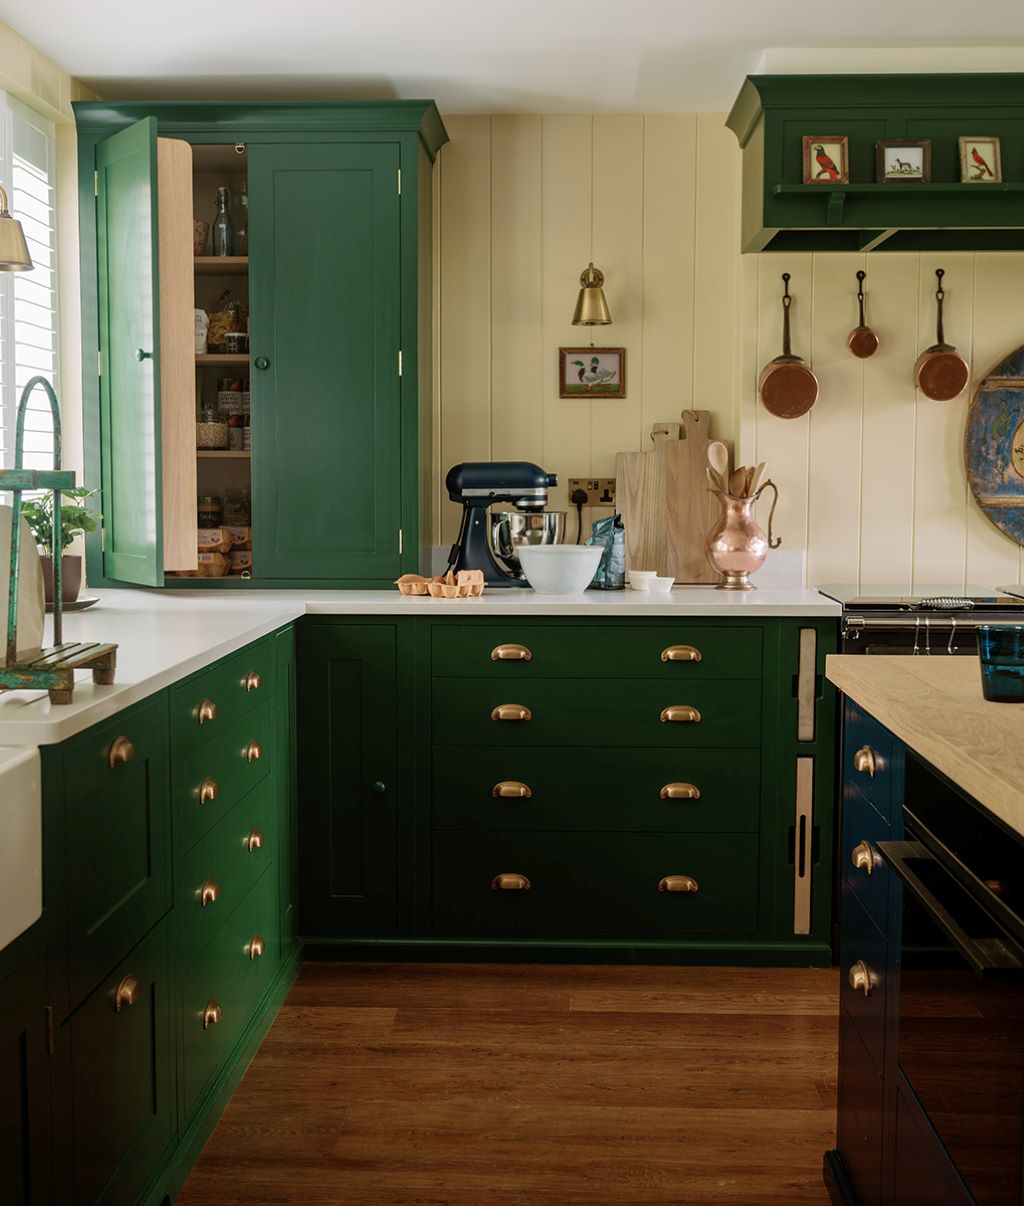 Avoiding Clashes Around Green Kitchen Cabinets